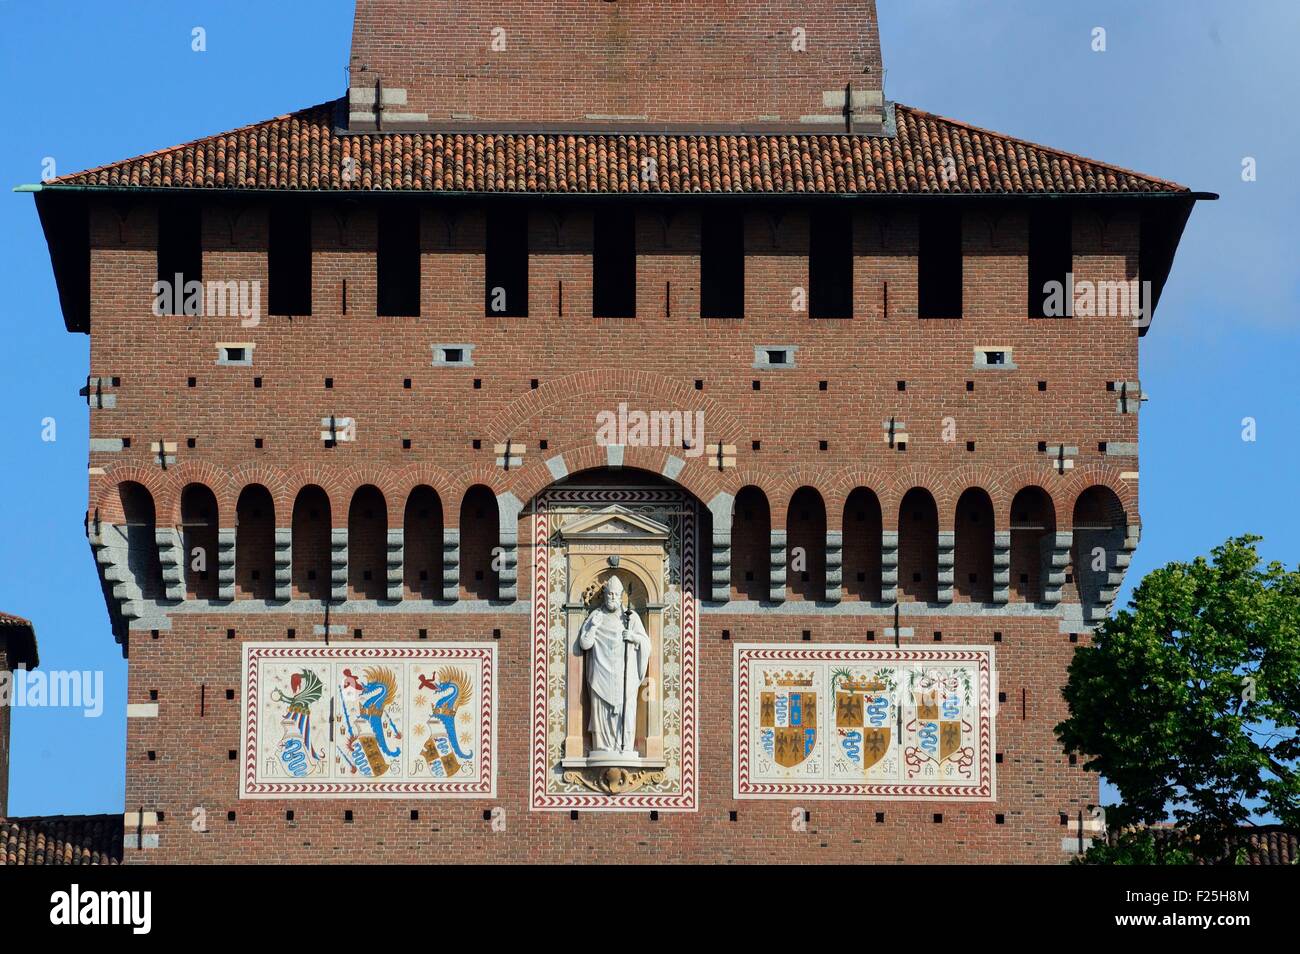 Italien, Lombardei, Mailand, Castello Sforzesco (Castello Sforzesco) erbaut im 15. Jahrhundert von Francesco Sforza (Herzog von Mailand) Stockfoto